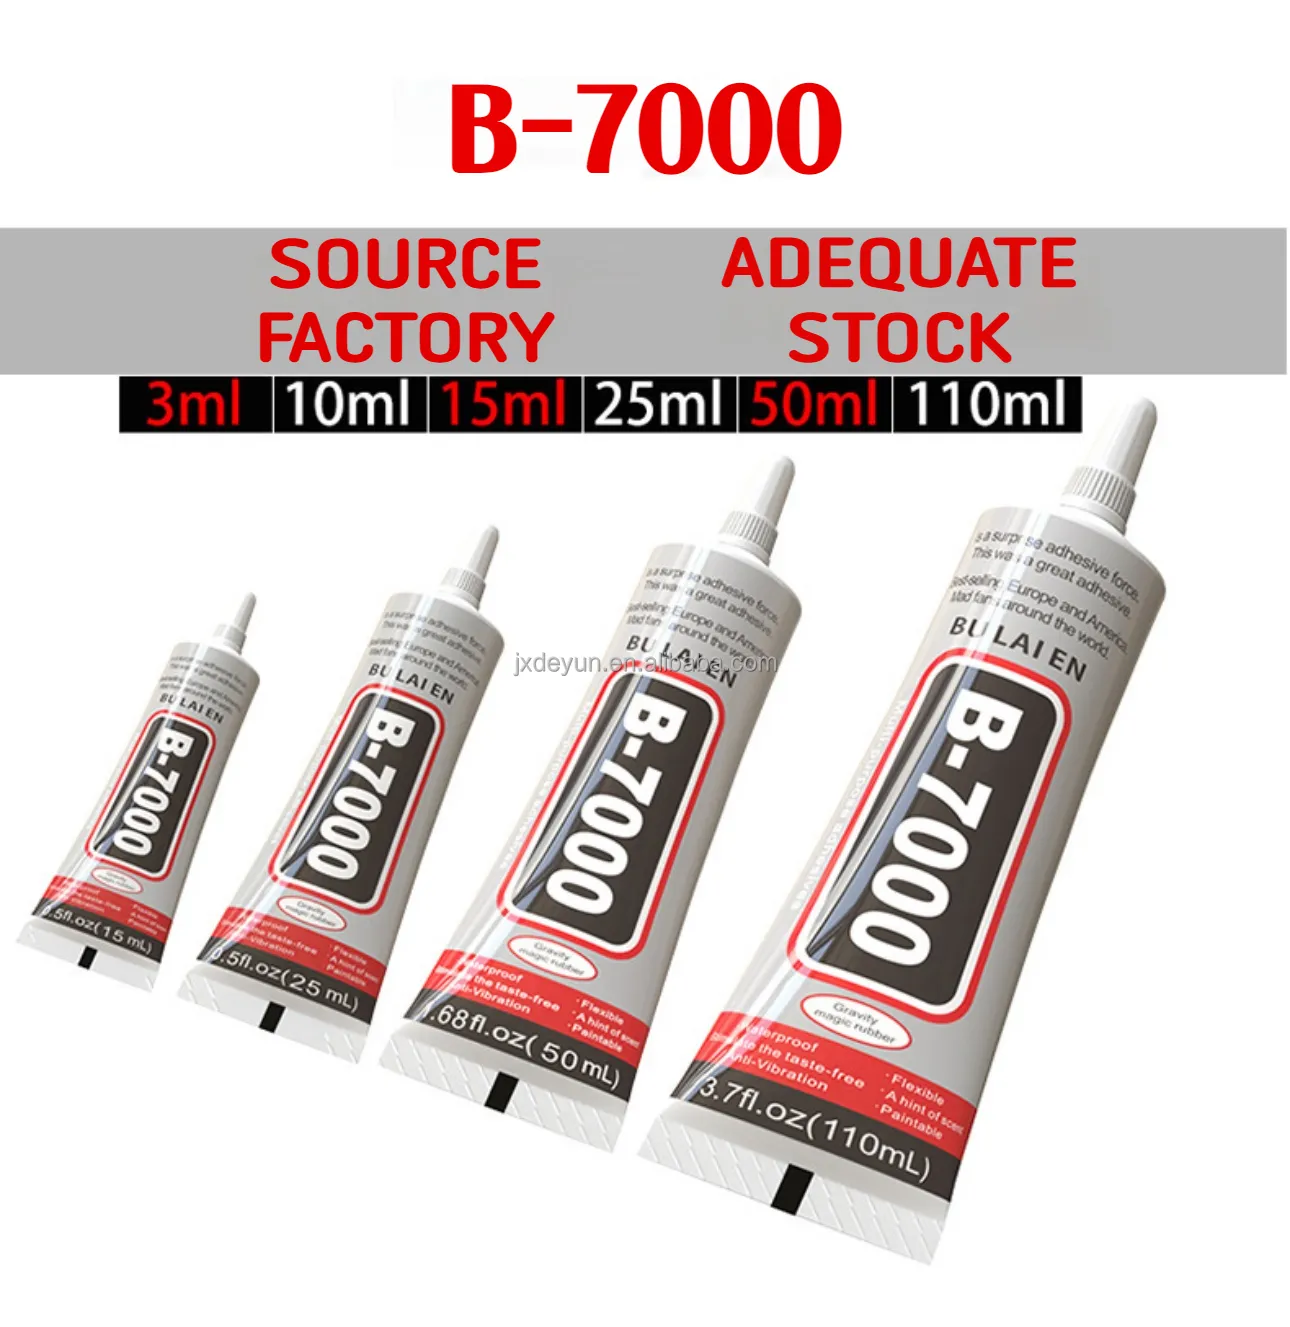 BU Lai En 110ml Venda quente B-7000 Adesivo Transparente Cola Líquida Cola Multiuso Super Cola Adesivos para Reparação de tela